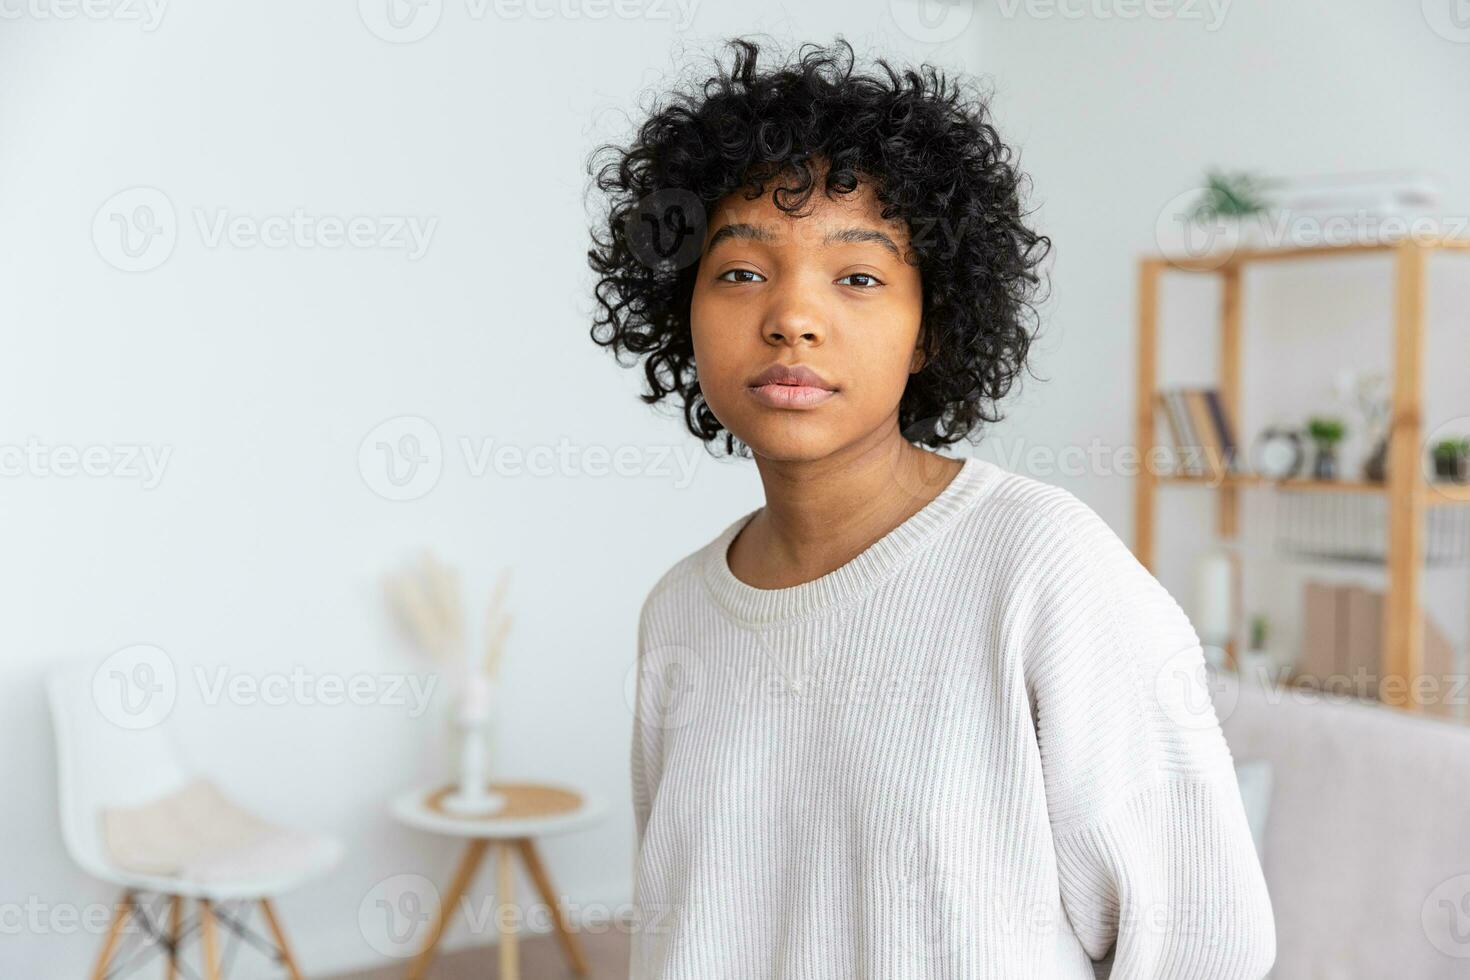 hermosa chica afroamericana con peinado afro en casa interior. joven africana con pelo rizado en la sala de estar. gente étnica de belleza, concepto de vida doméstica. foto